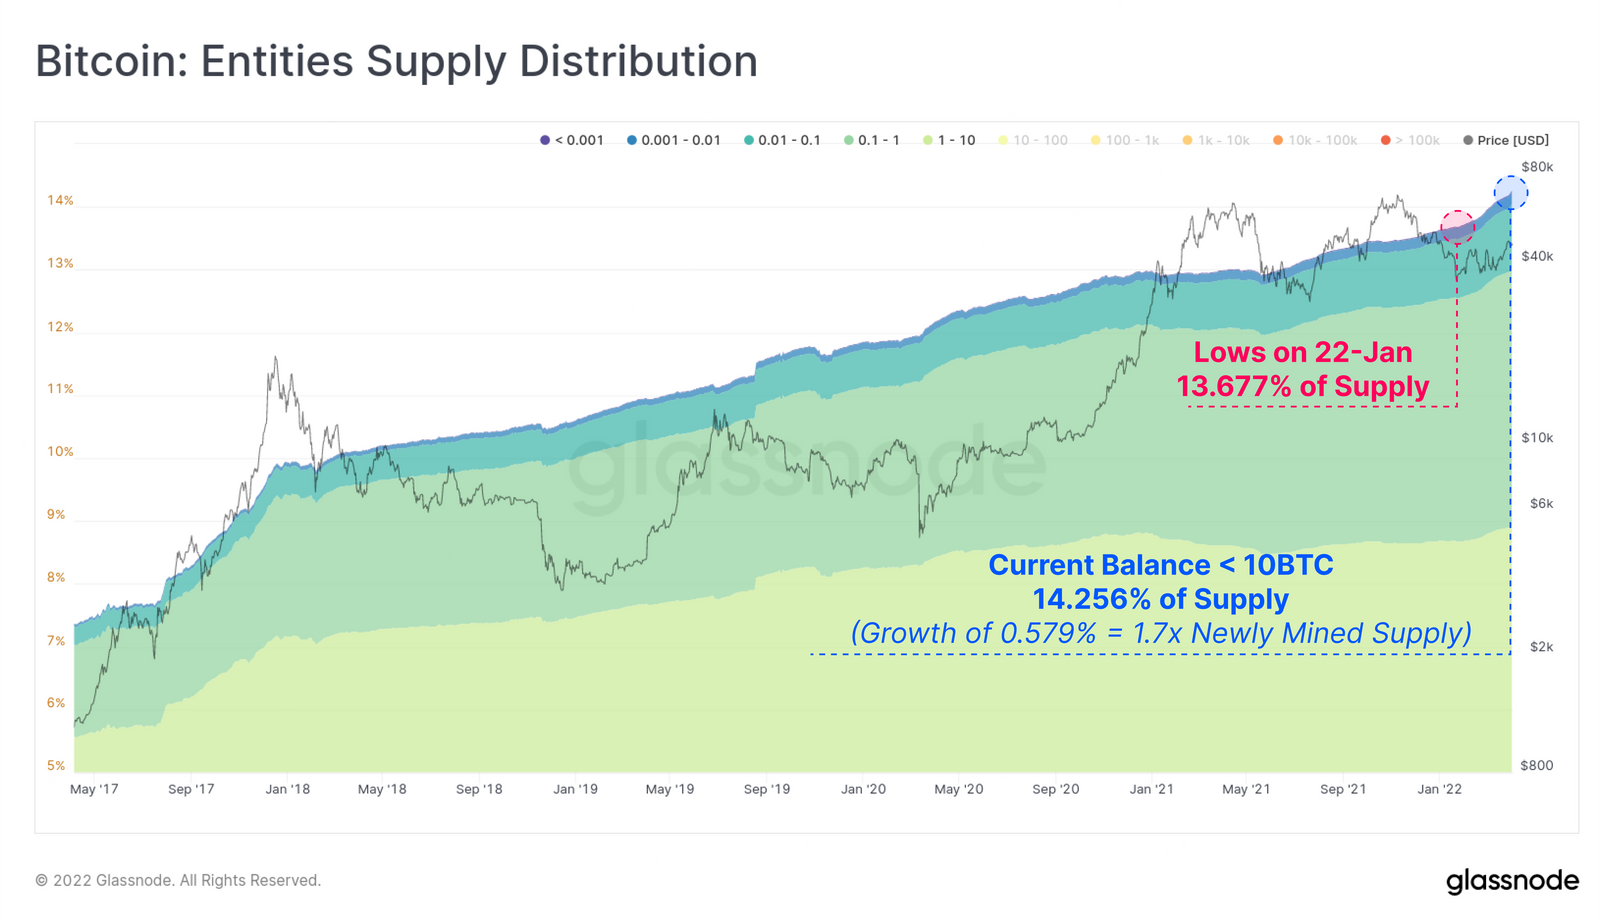 Bitcoin: Entities Supply Distribution